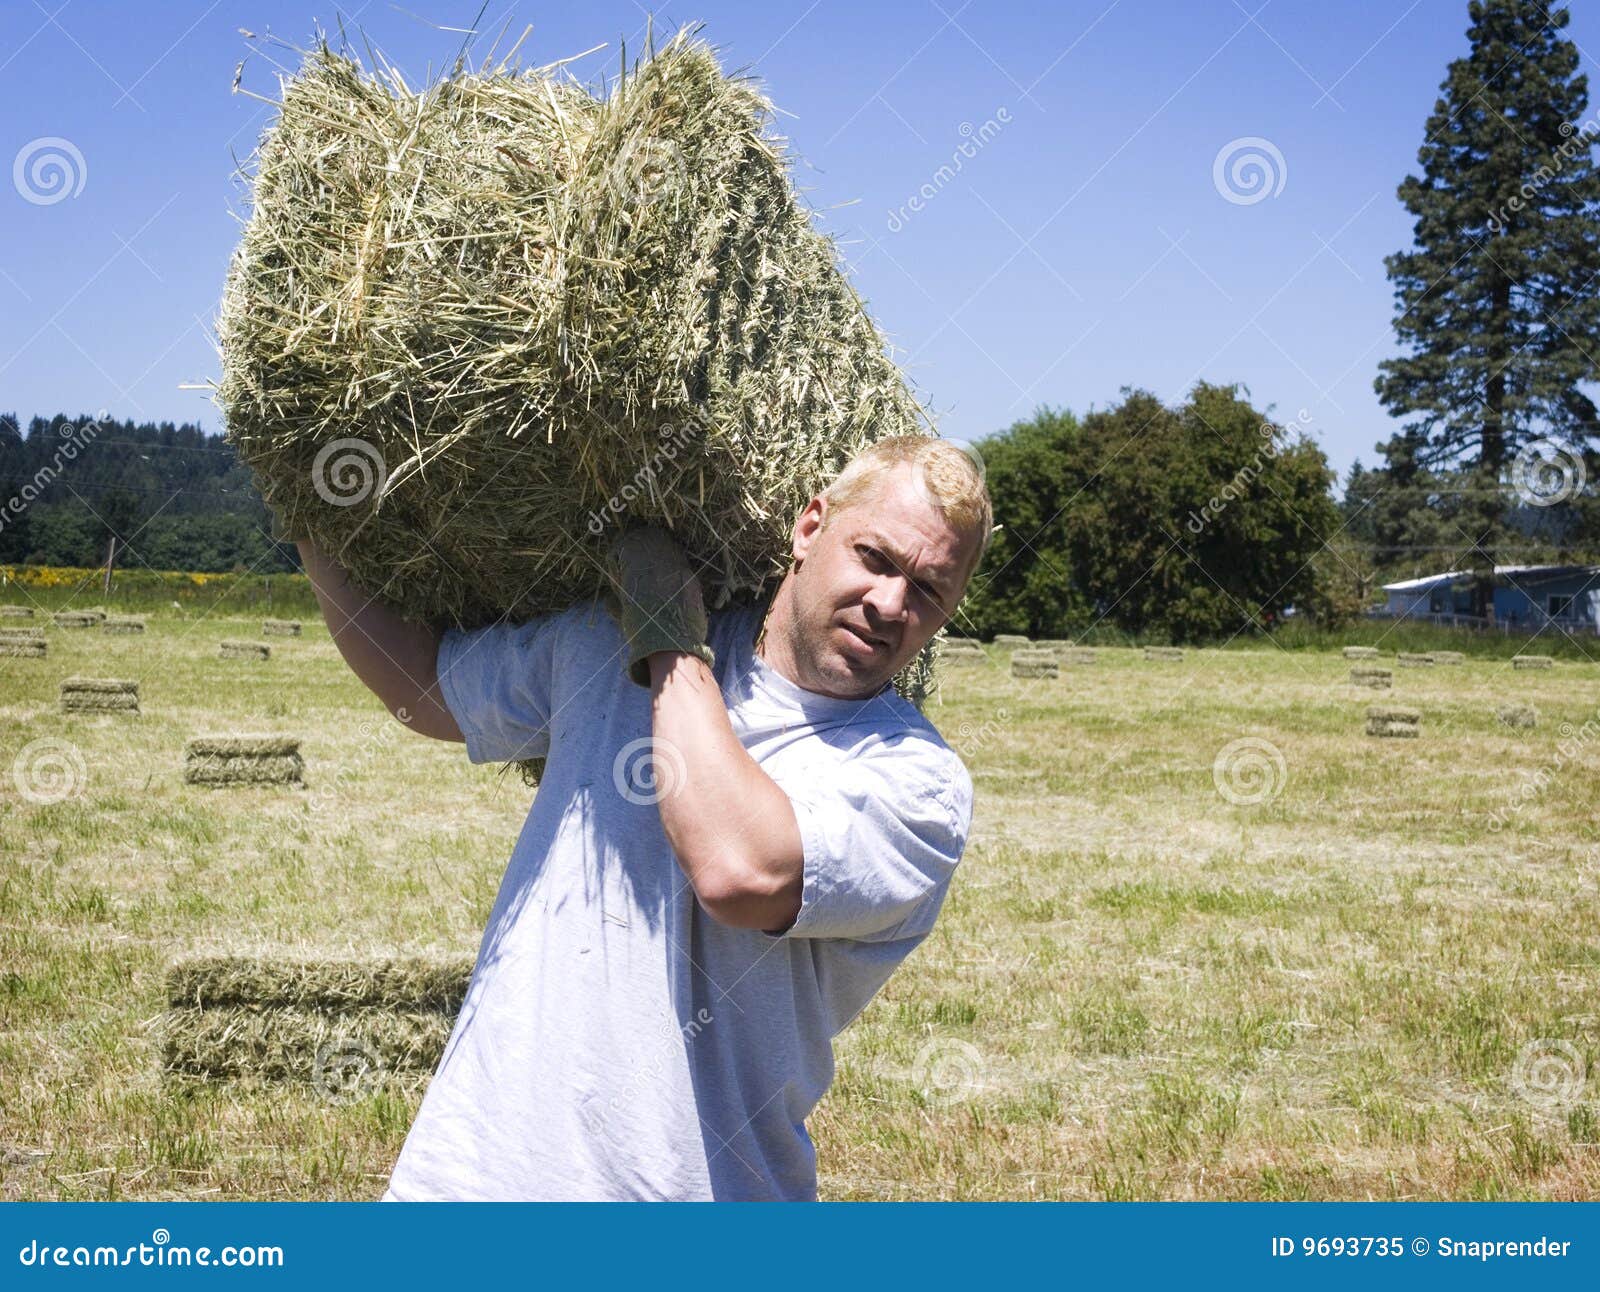 man lifting hay bale